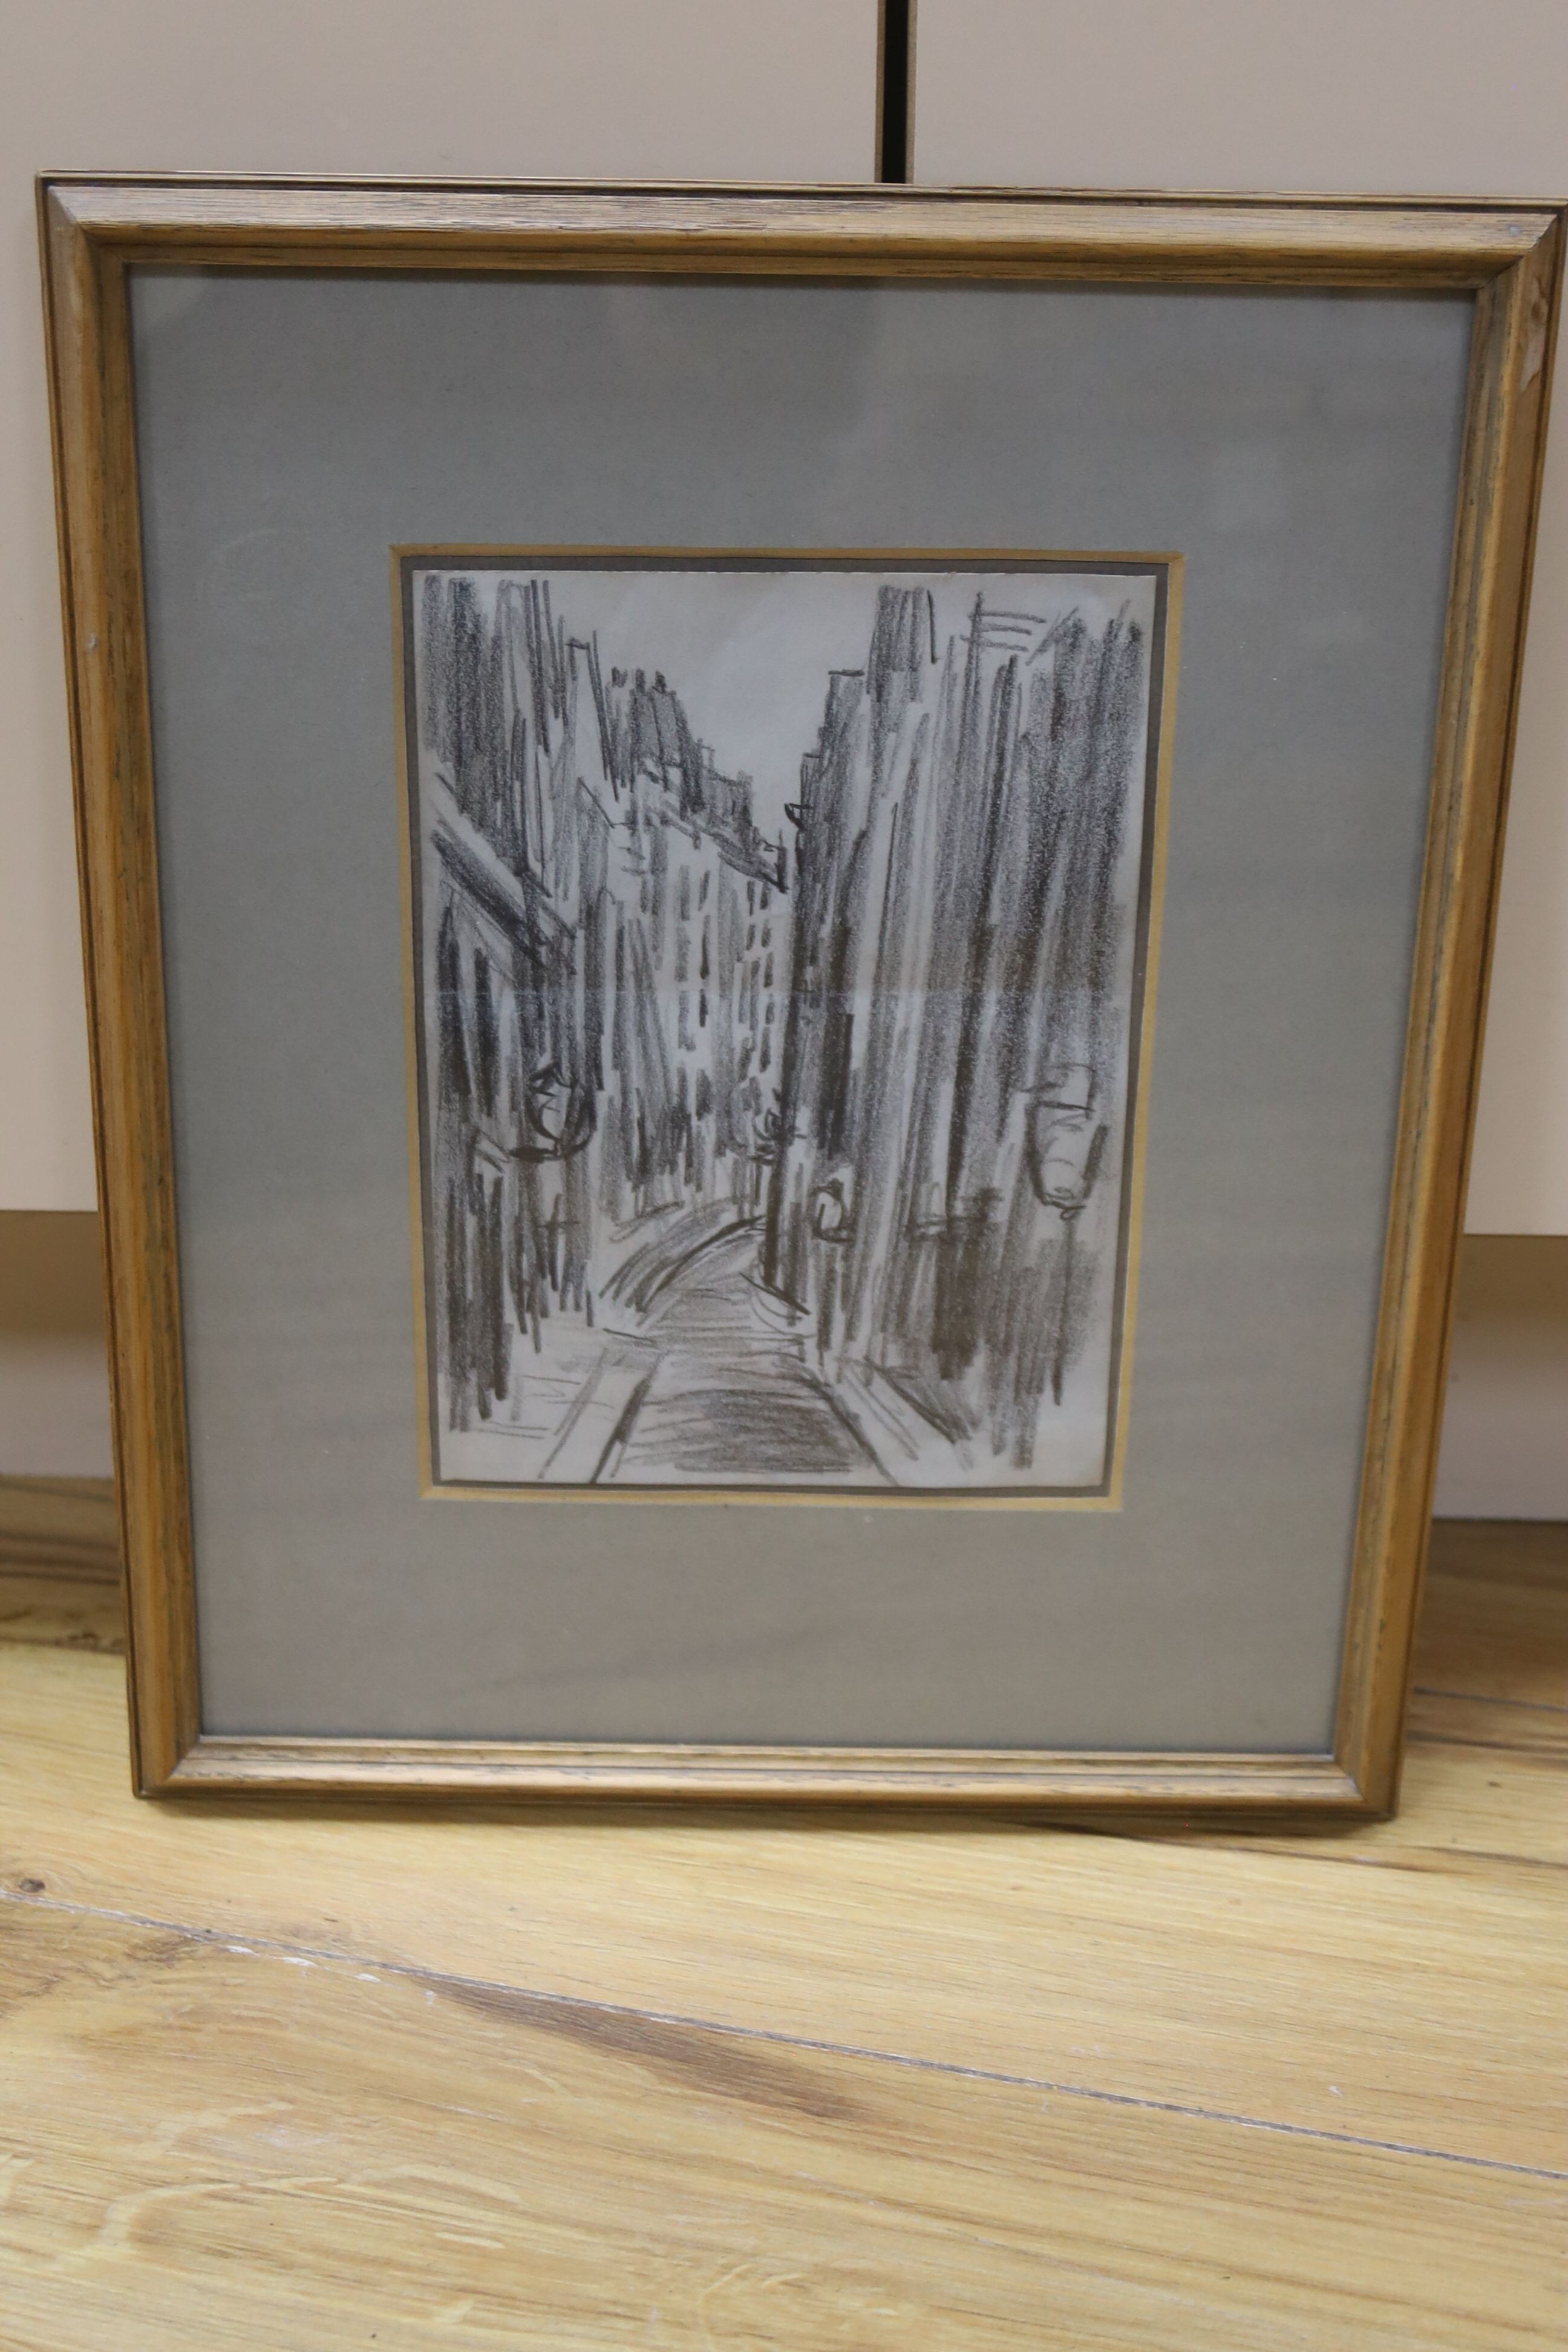 Sir Jacob Epstein (1880-1959), pencil drawing, 'Paris, Left Bank', sketch for illustration for Les Fleurs du Mal', Boundary Gallery label verso, 19 x 14cm